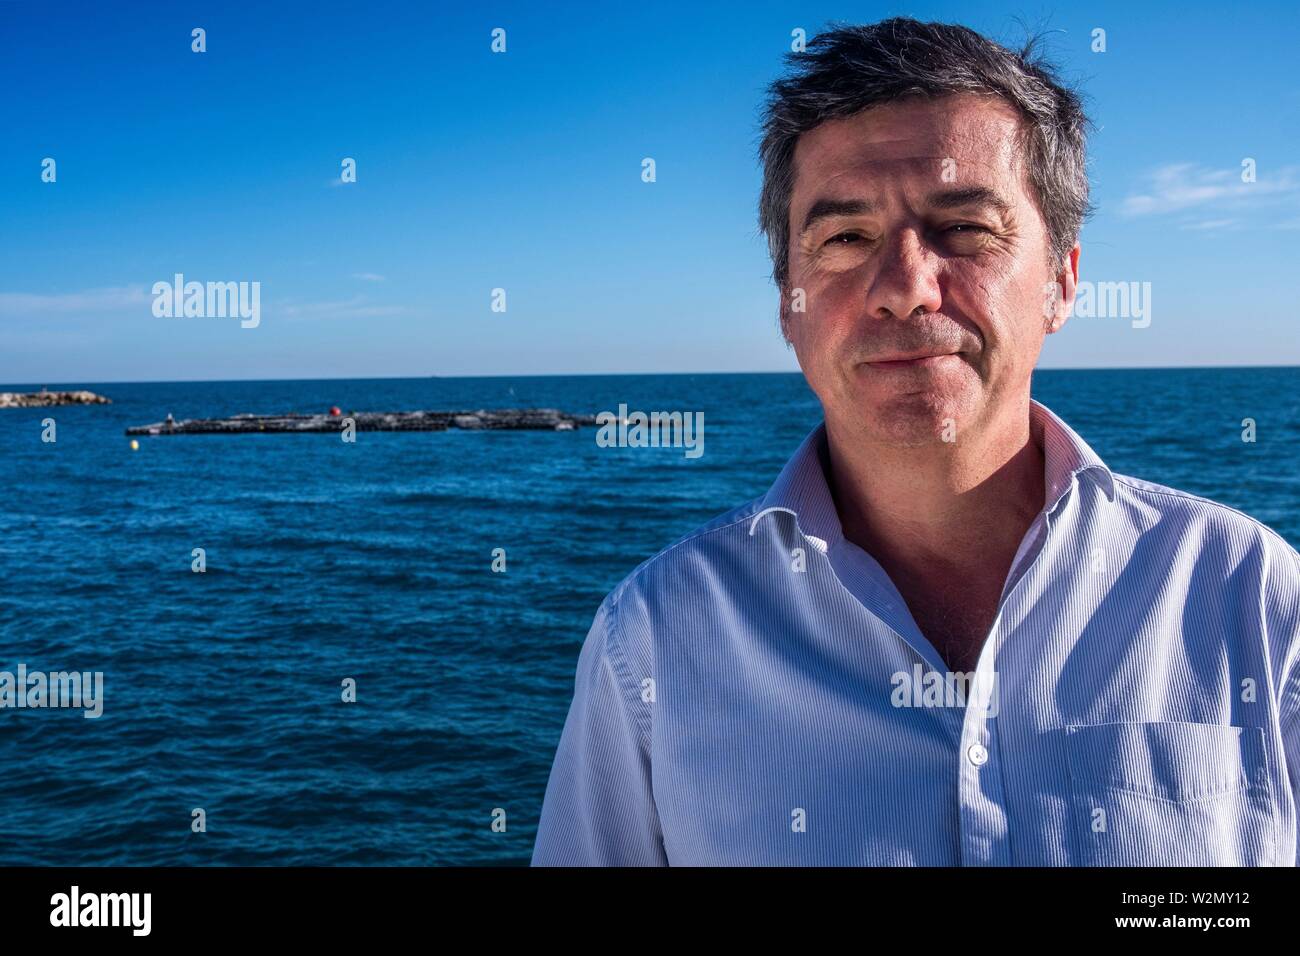 France-Paca - Alpes Maritimes - Herr Antoine Mangin, aus einer Aquakultur Unternehmen in Sofia A. Stockfoto